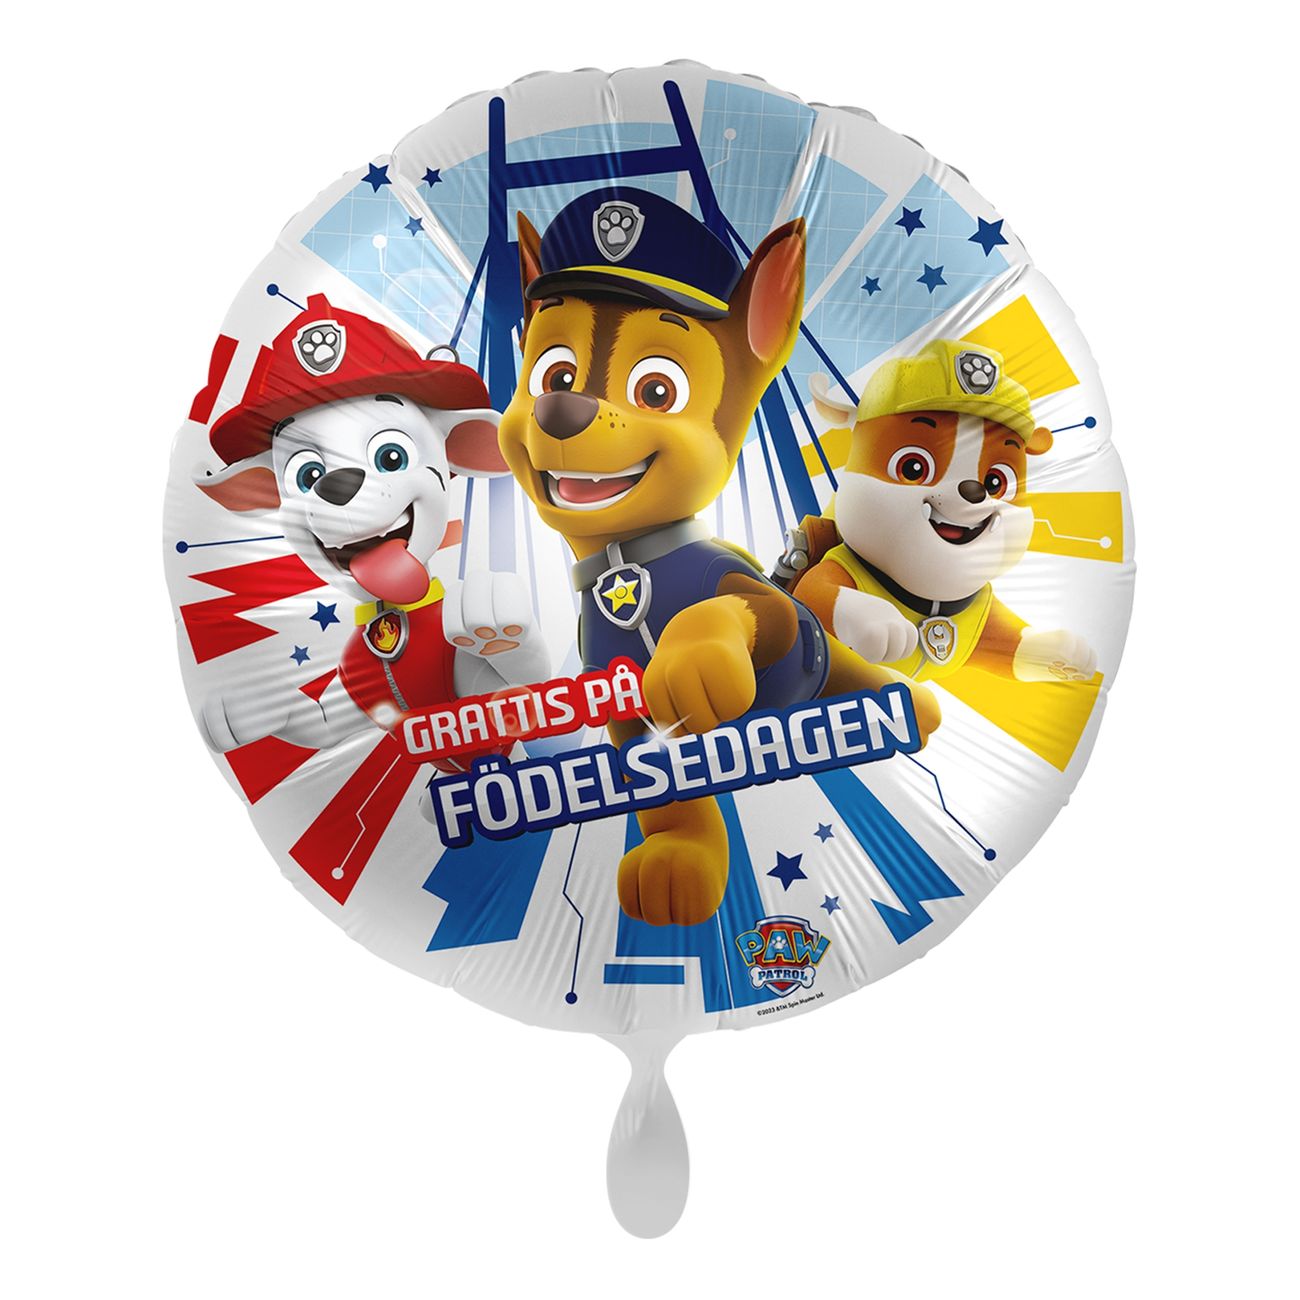 folieballong-paw-patrol-grattis-pa-fodelsedagen-100754-2